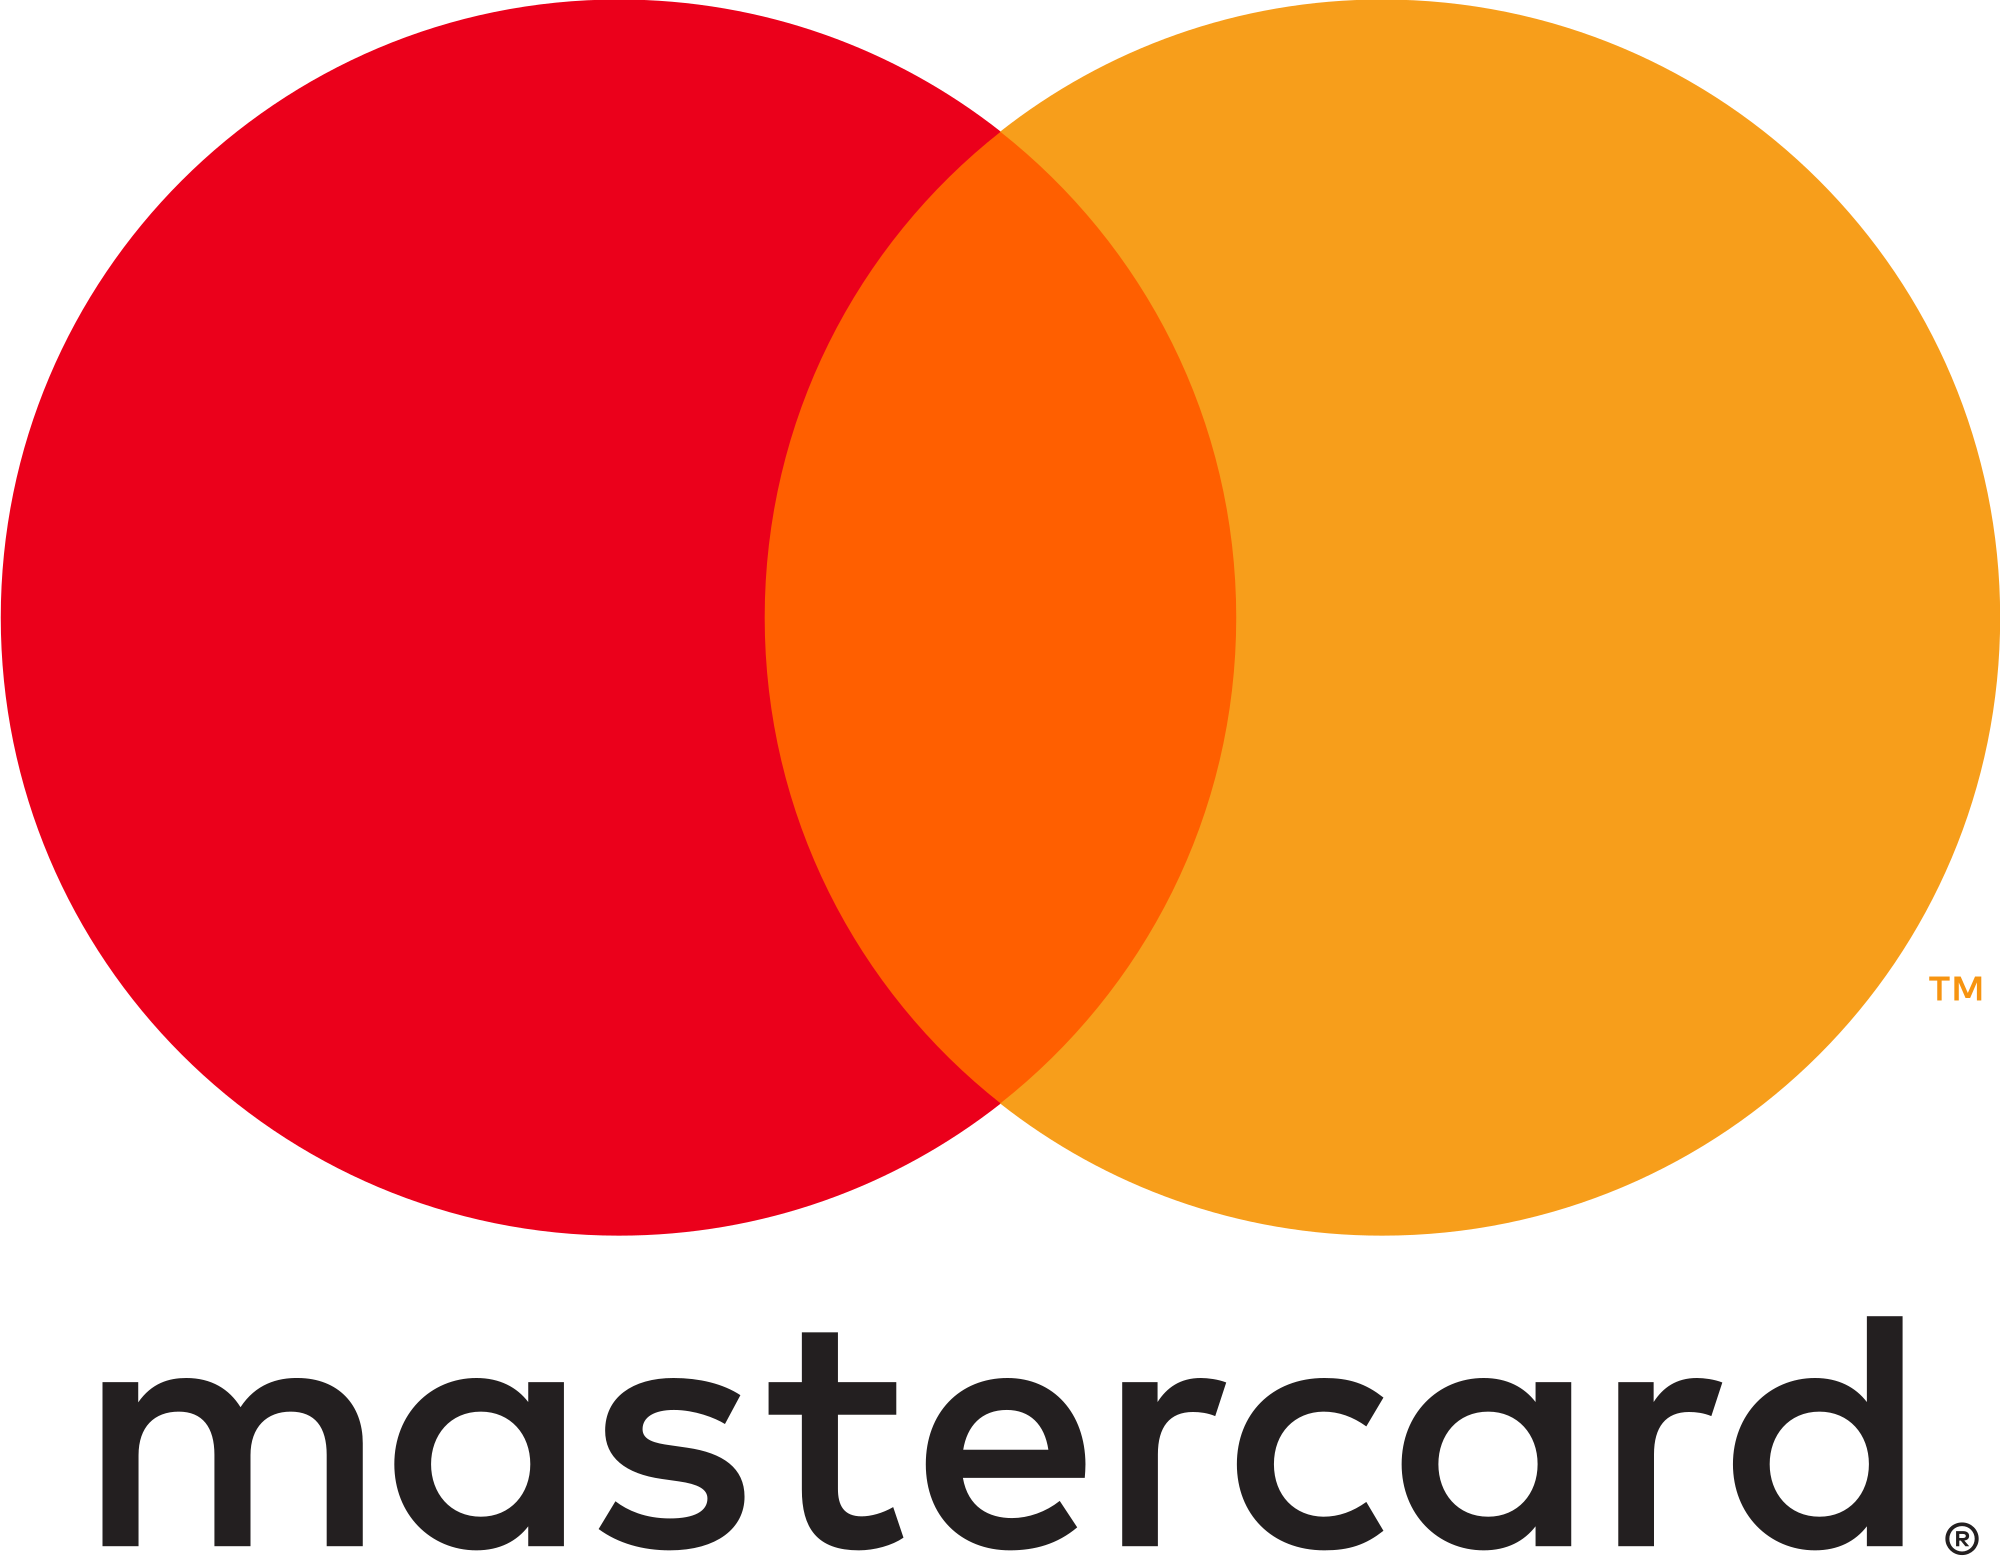 2000px-Mastercard-logo.svg.png